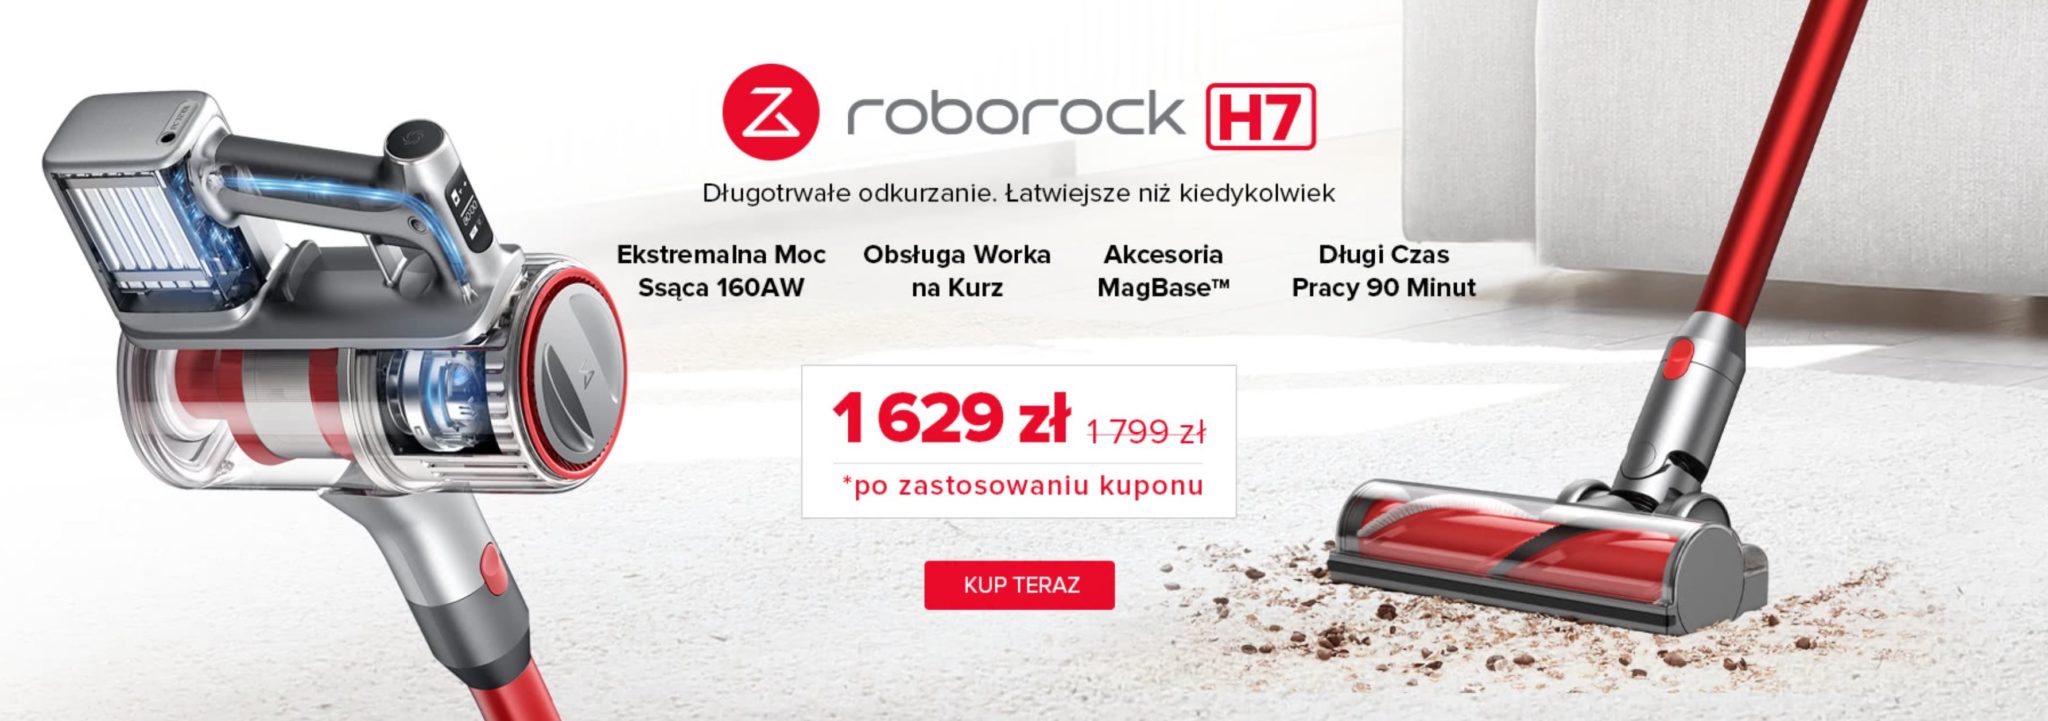 Roborock H7 w promocji